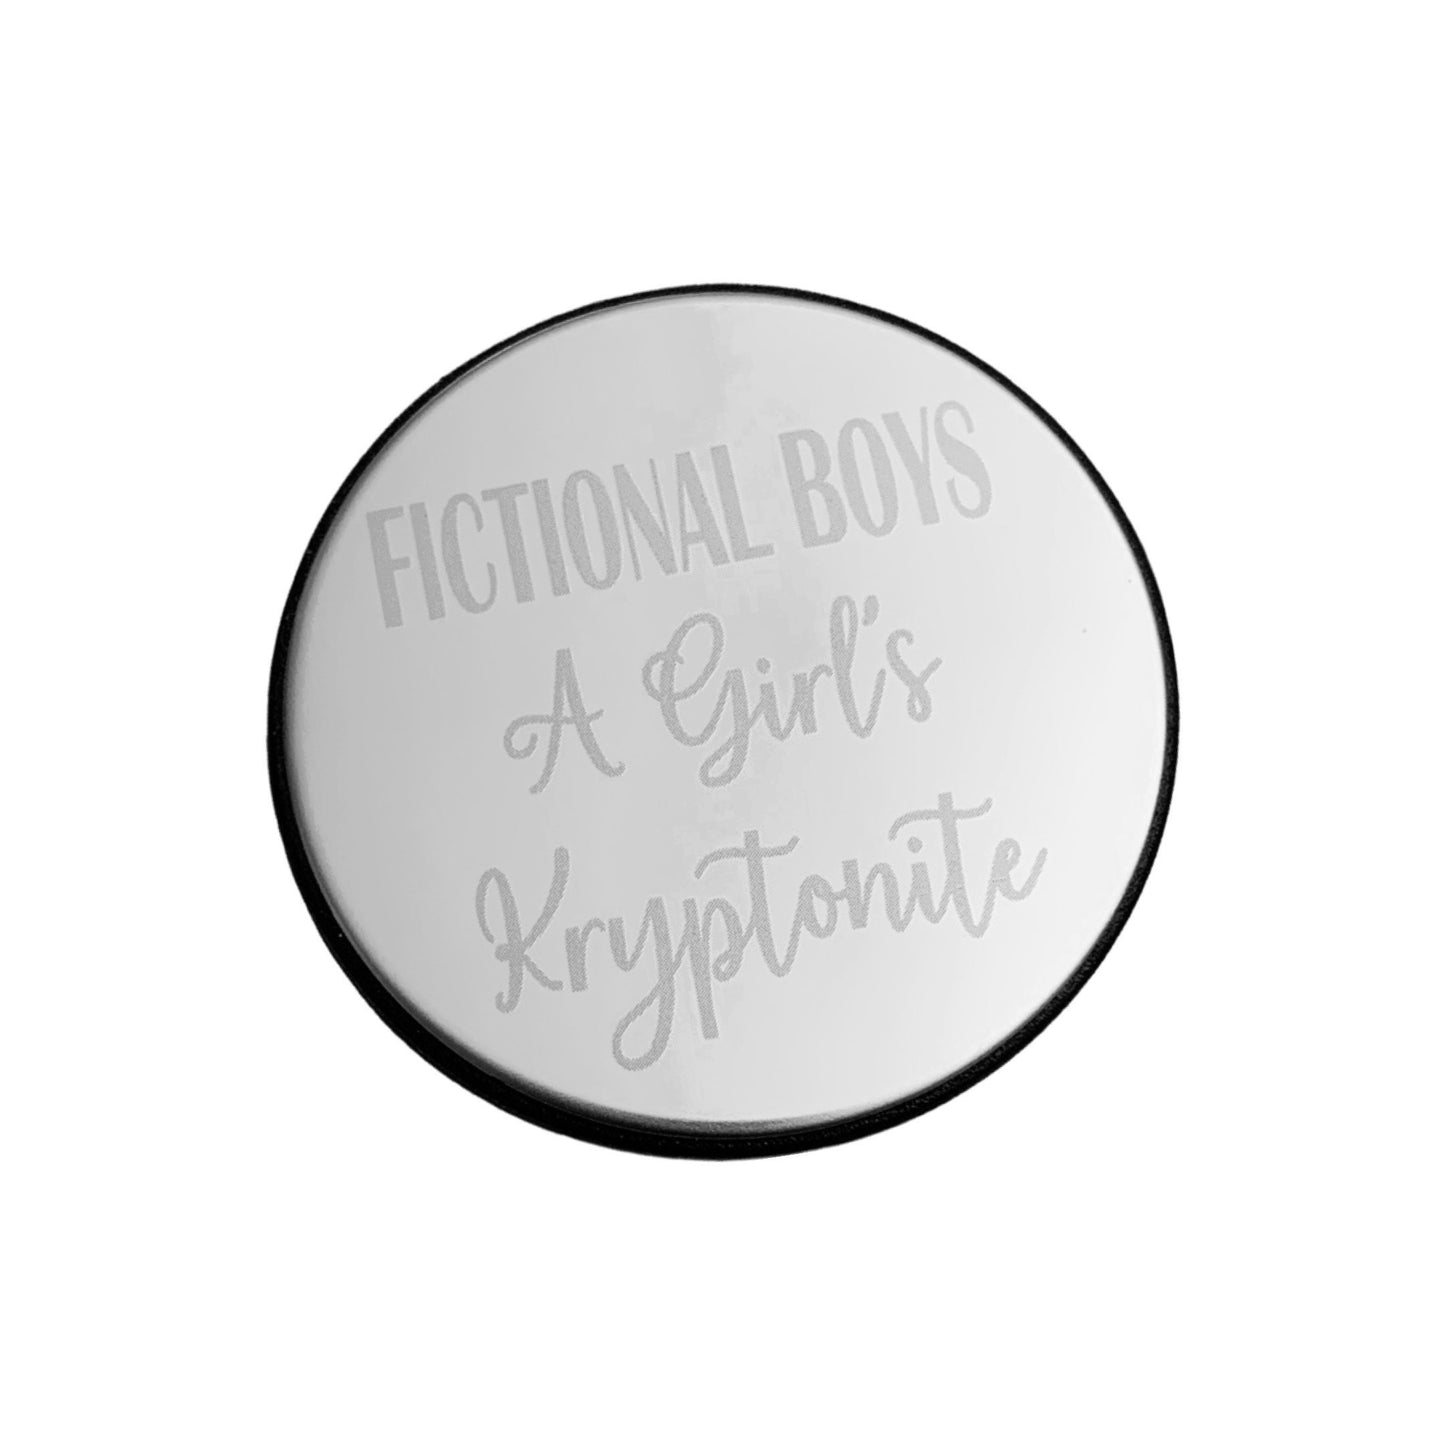 Fictional Boys, A Girl's Kryptonite | Phone / Kindle Grip